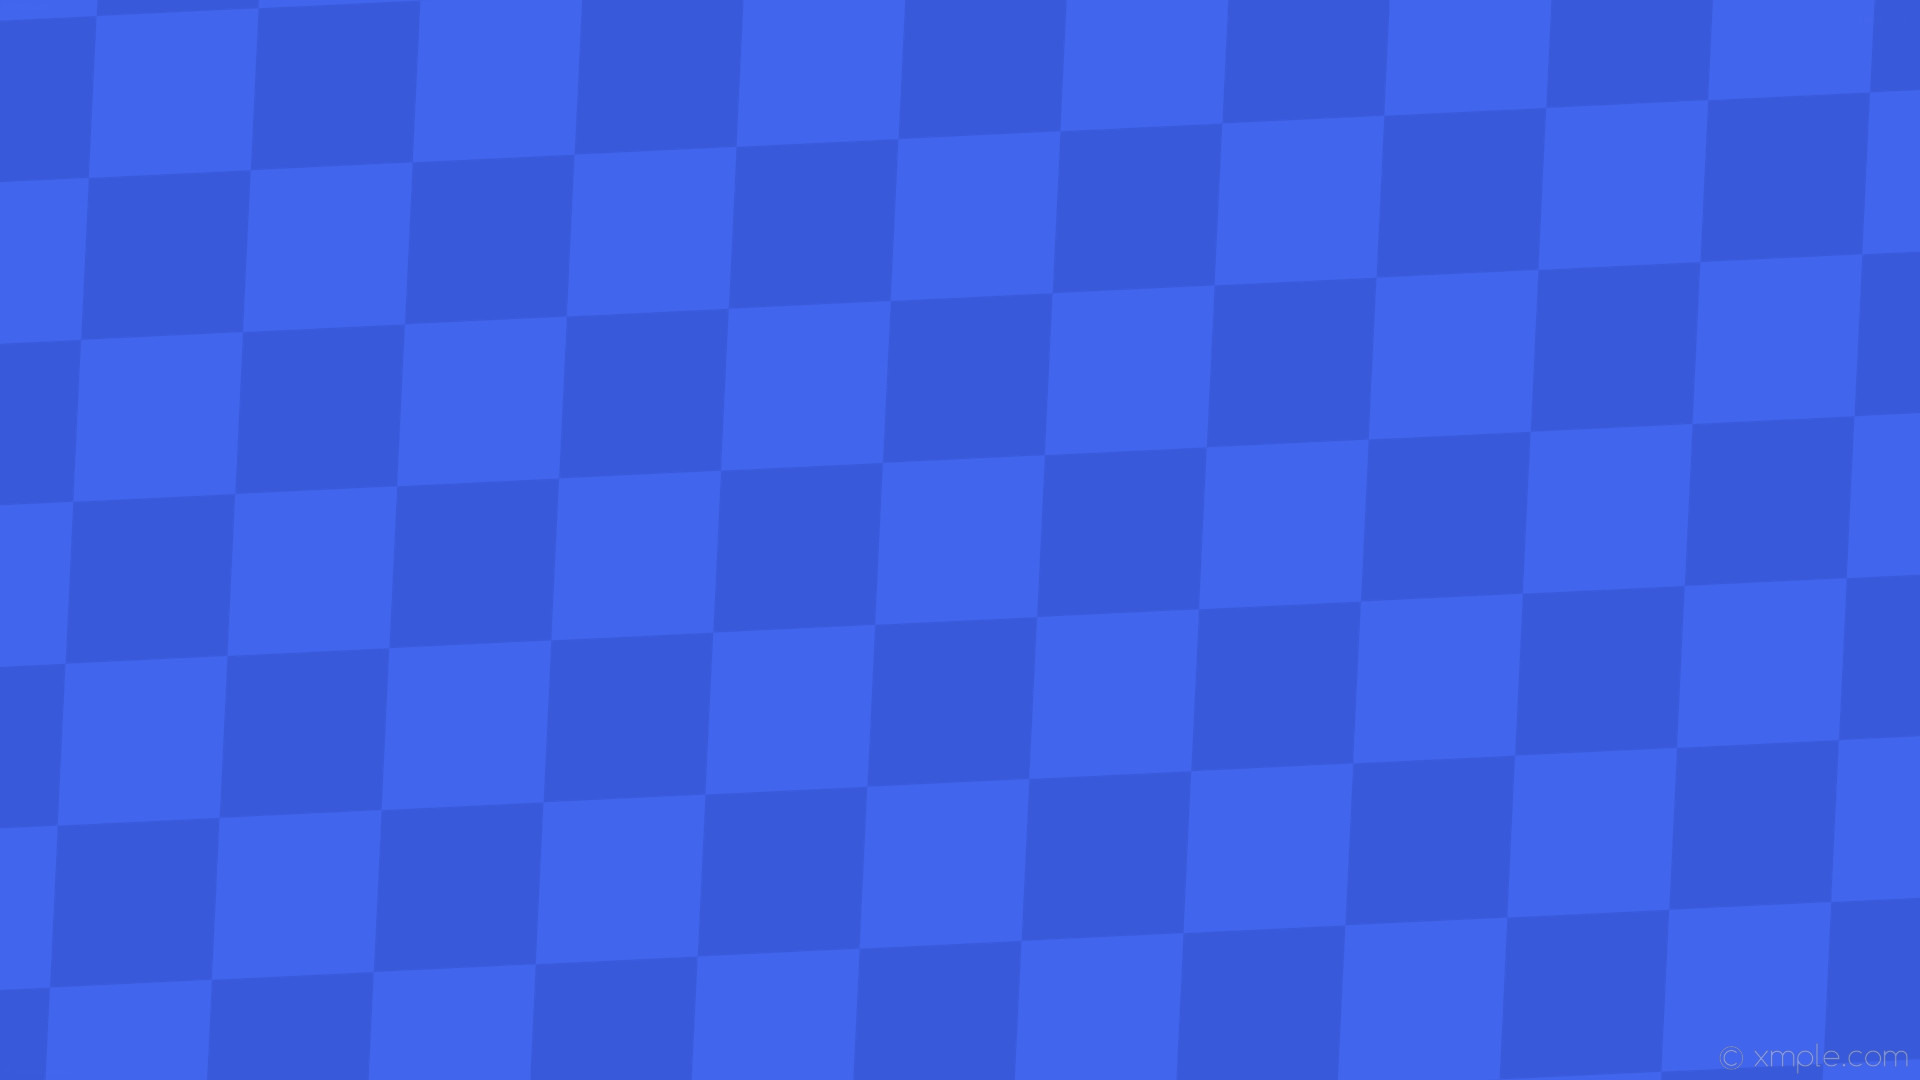 1920x1080 wallpaper lozenge blue diamond rhombus #4265ed #3859d9 45Â° 240px 218px